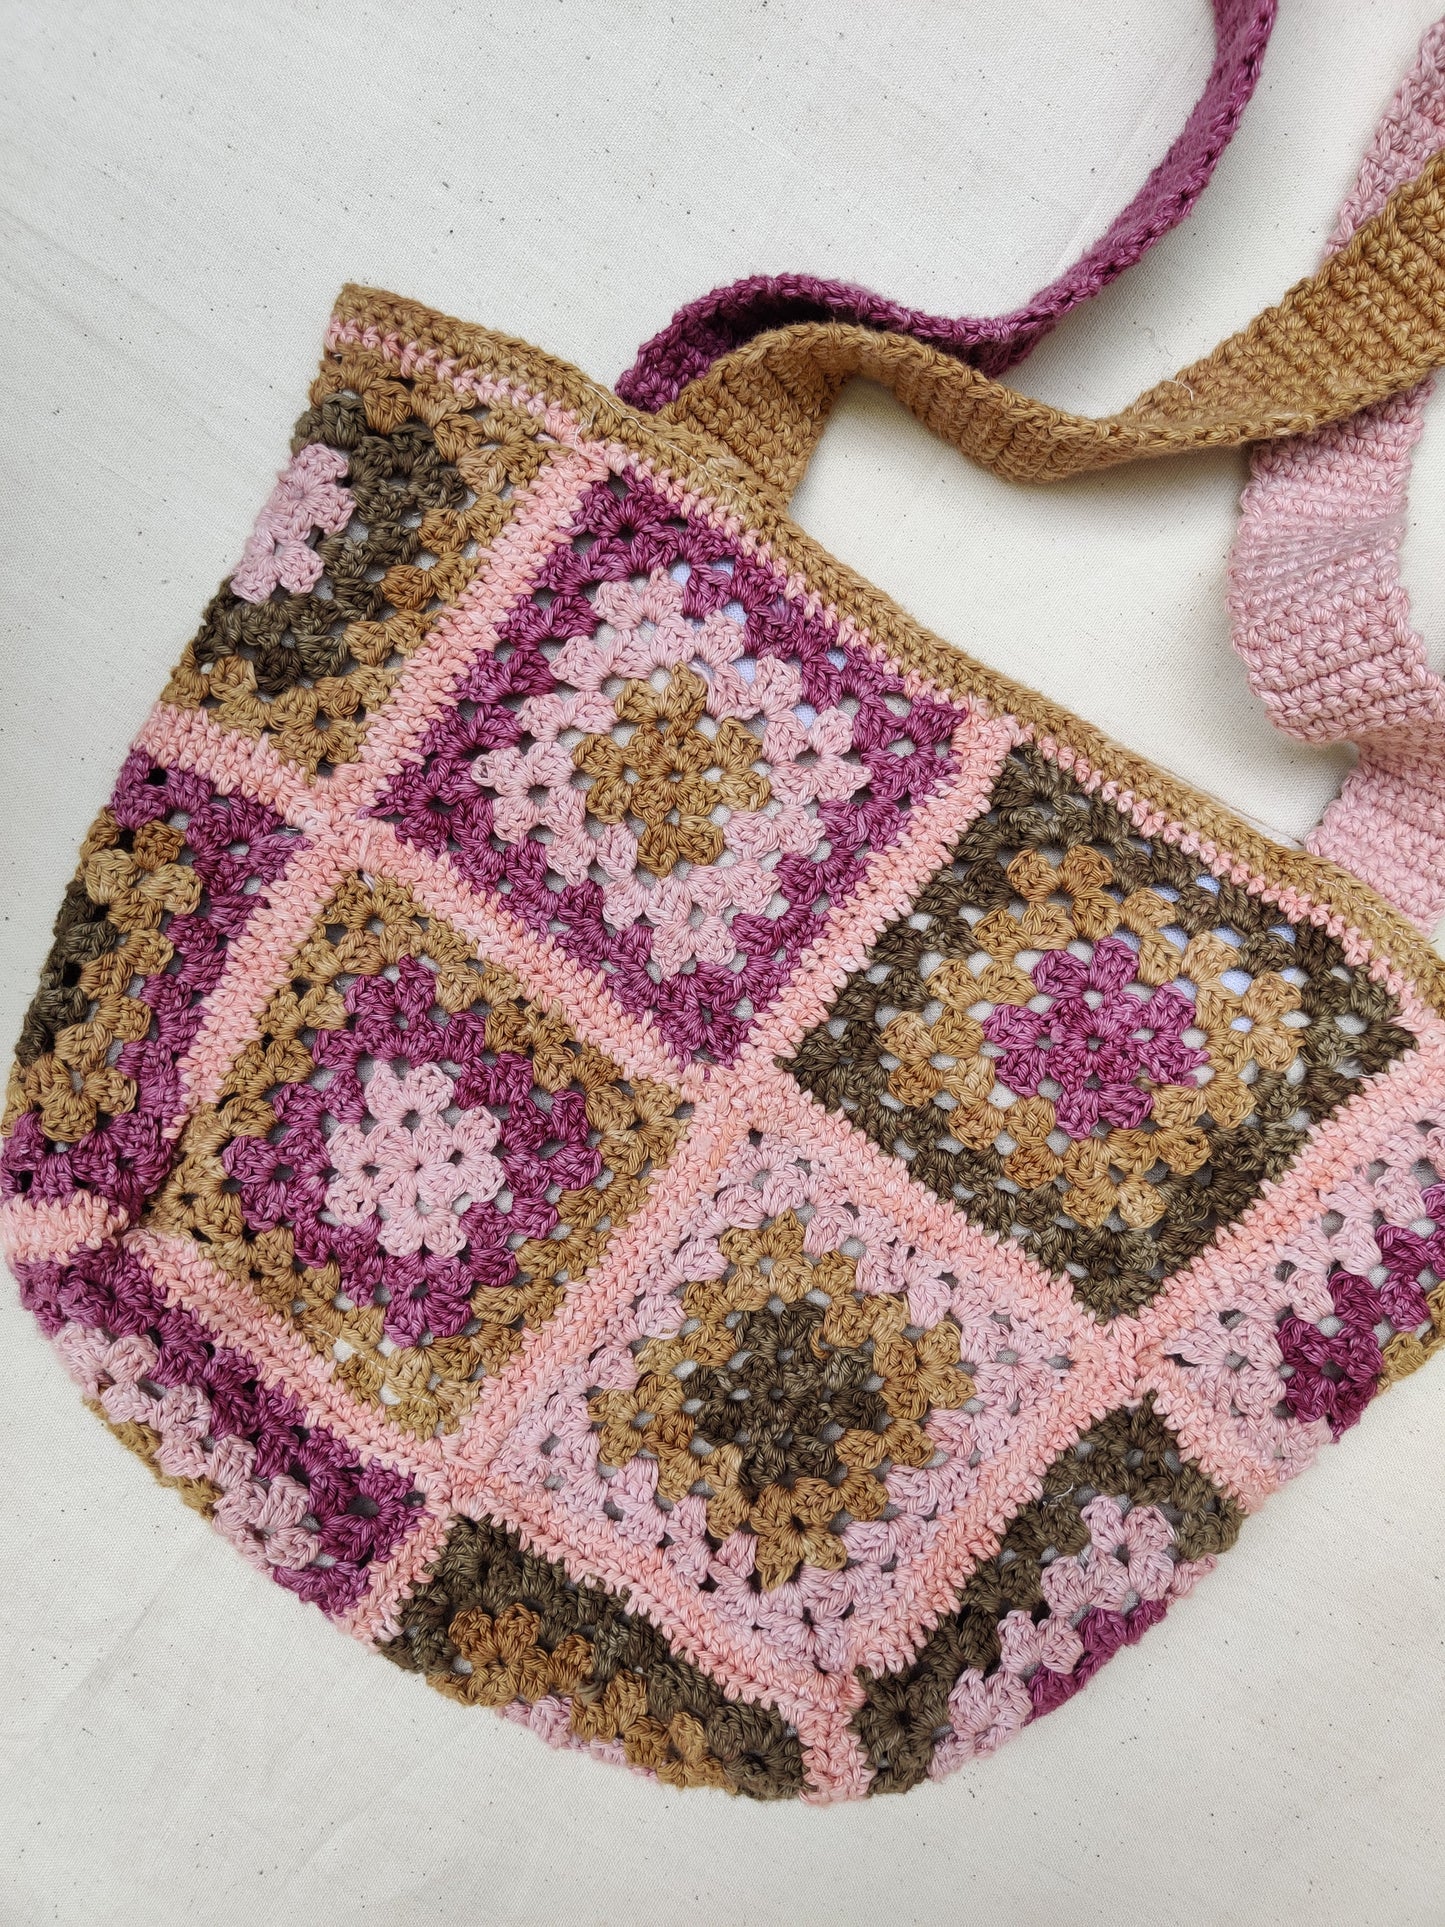 Crochet Mini Tote Bag